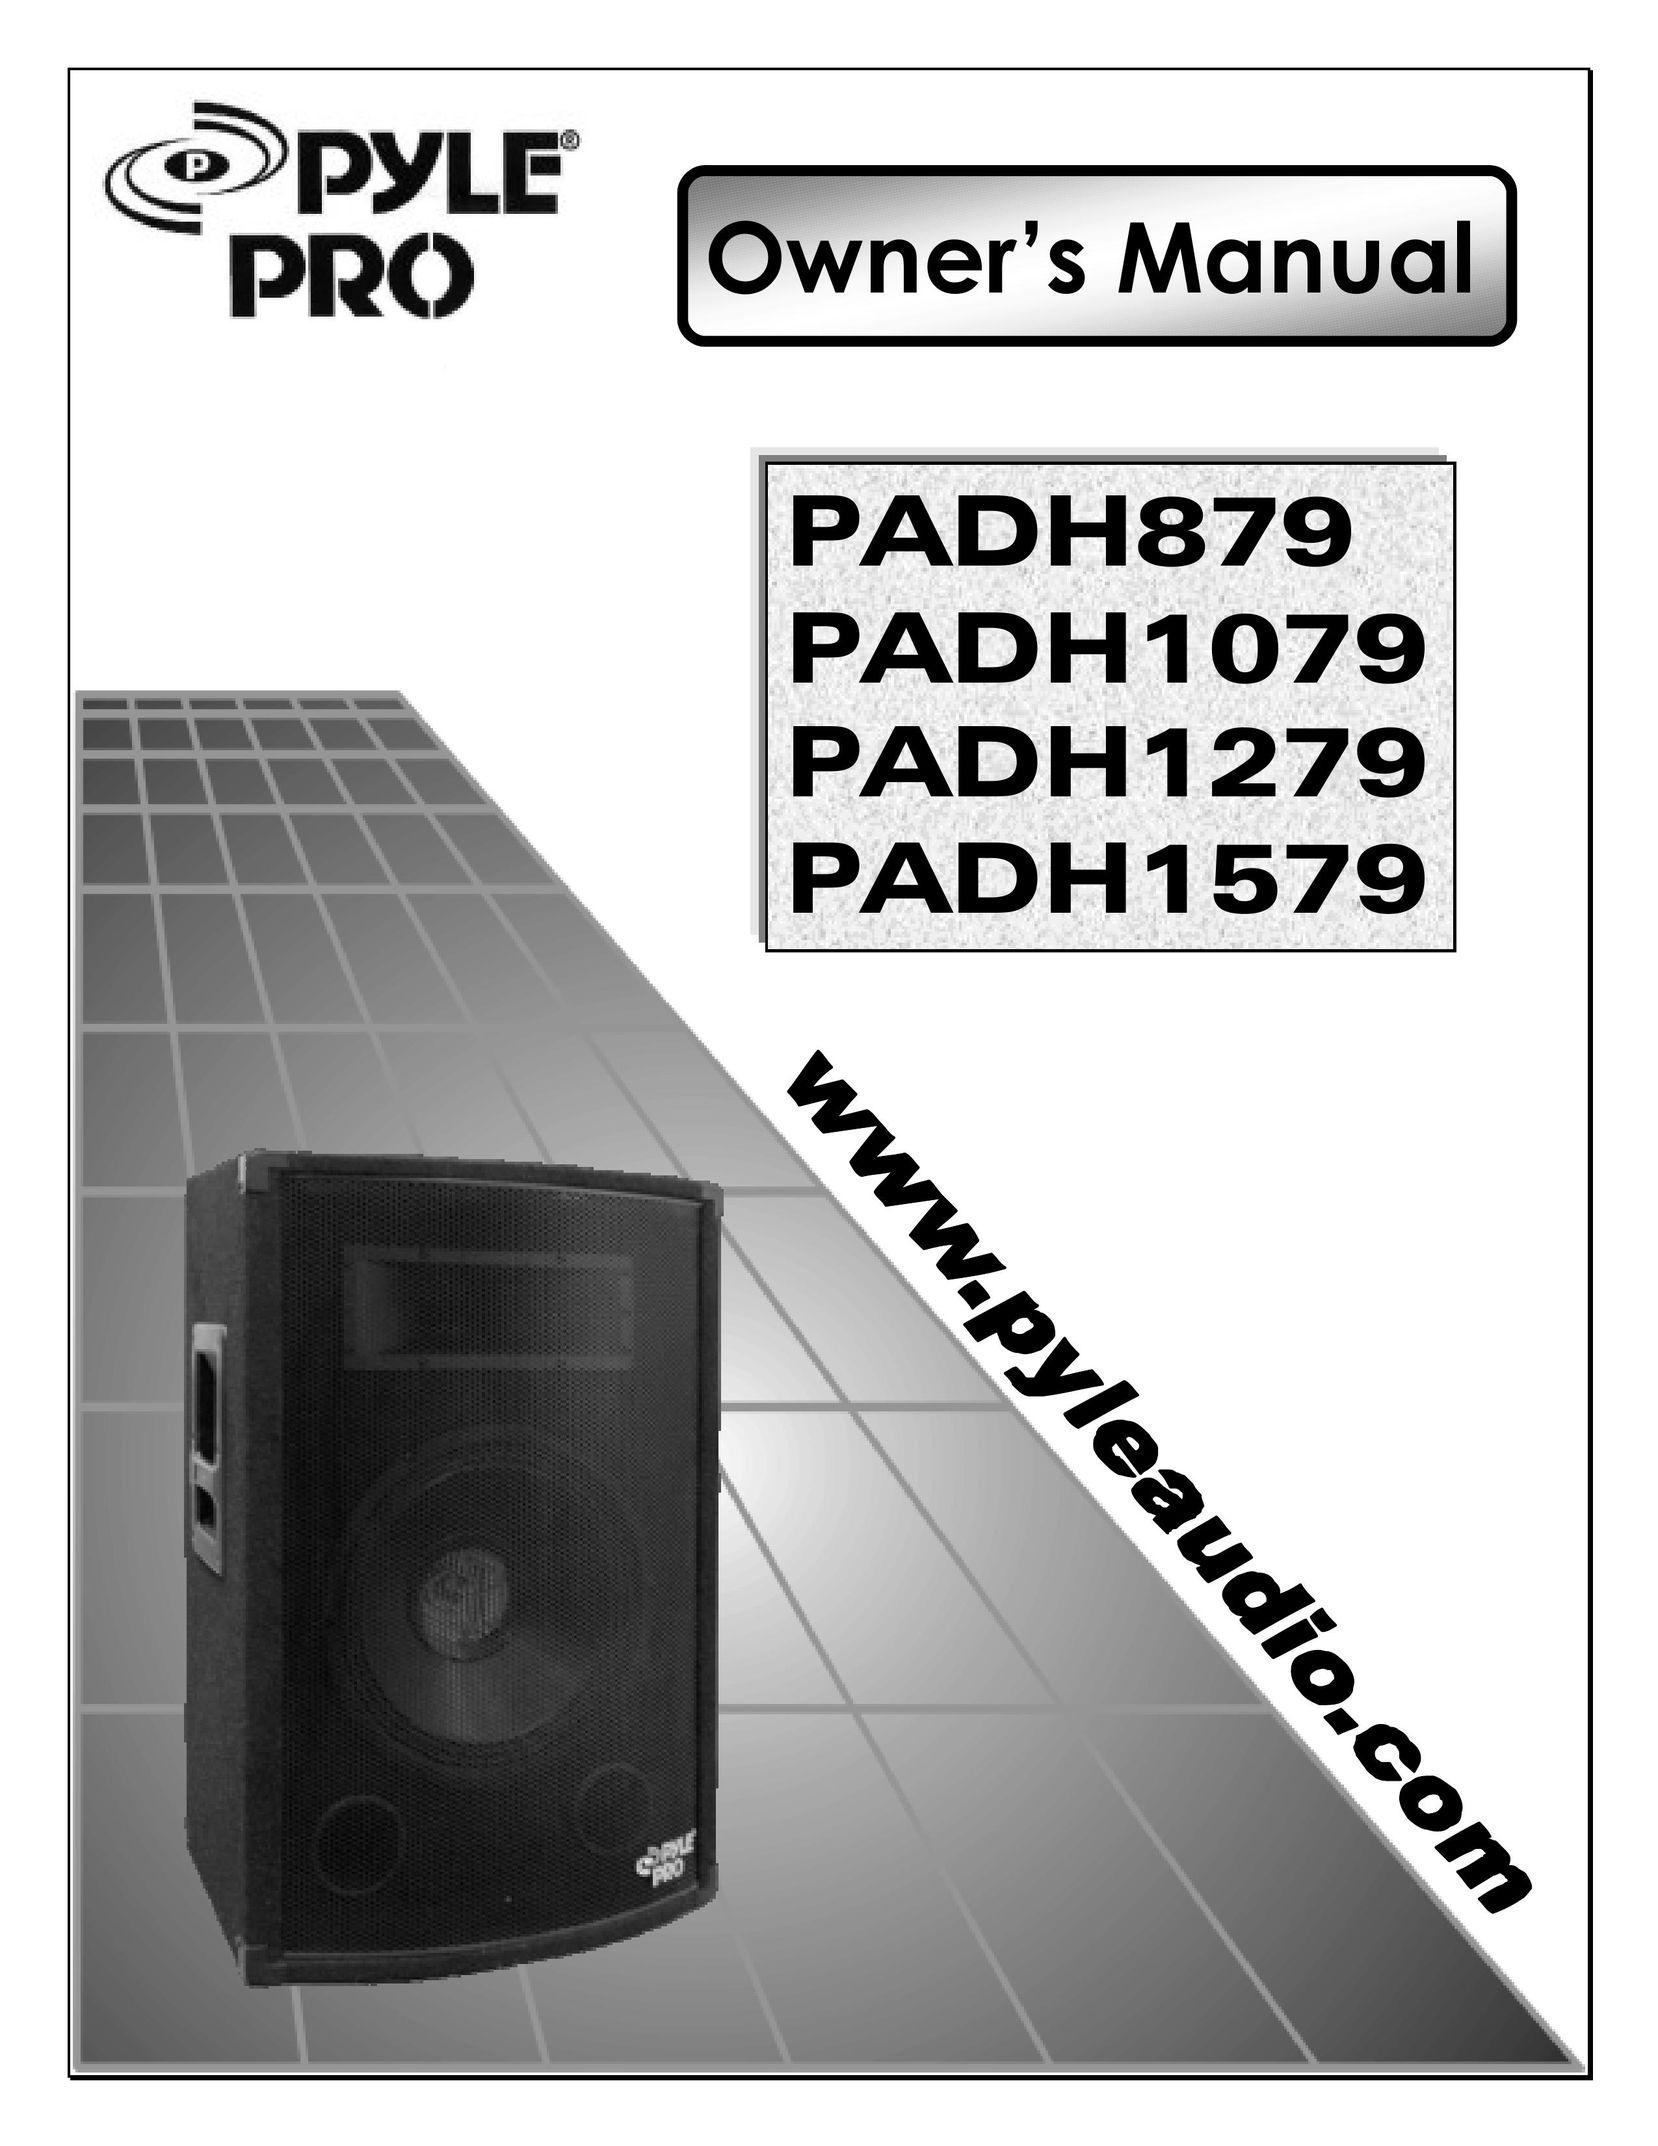 PYLE Audio PADH1079 Portable Speaker User Manual